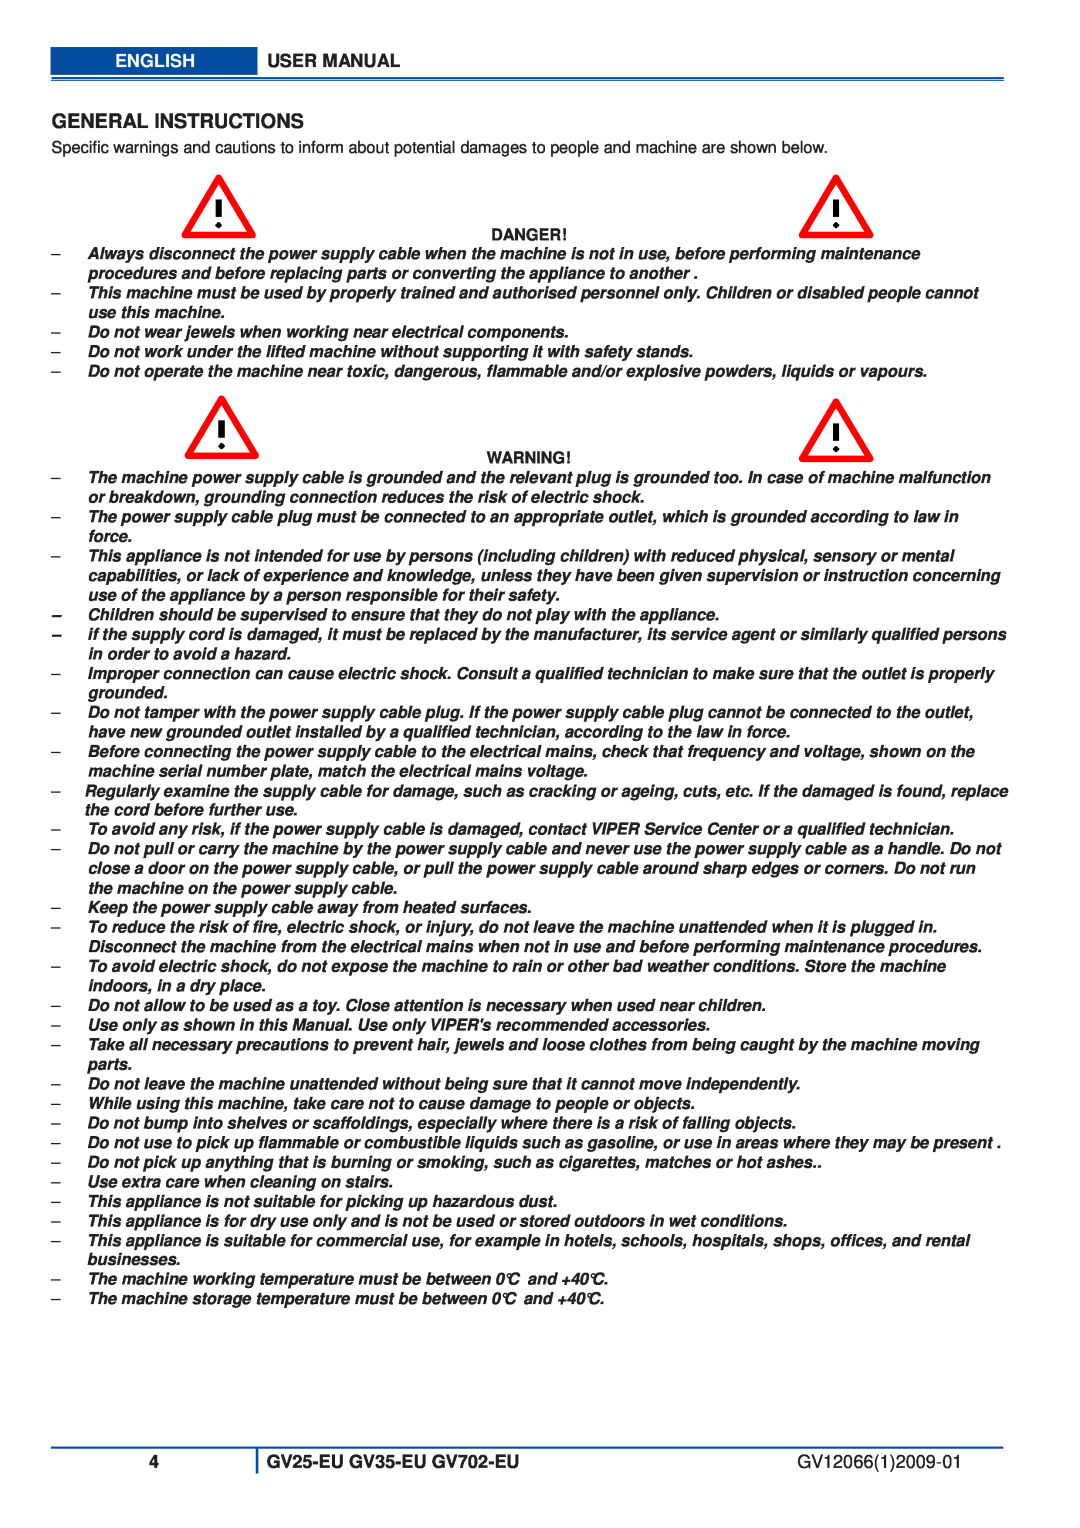 Viper user manual General Instructions, English, GV25-EU GV35-EU GV702-EU, GV1206612009-01, Danger 